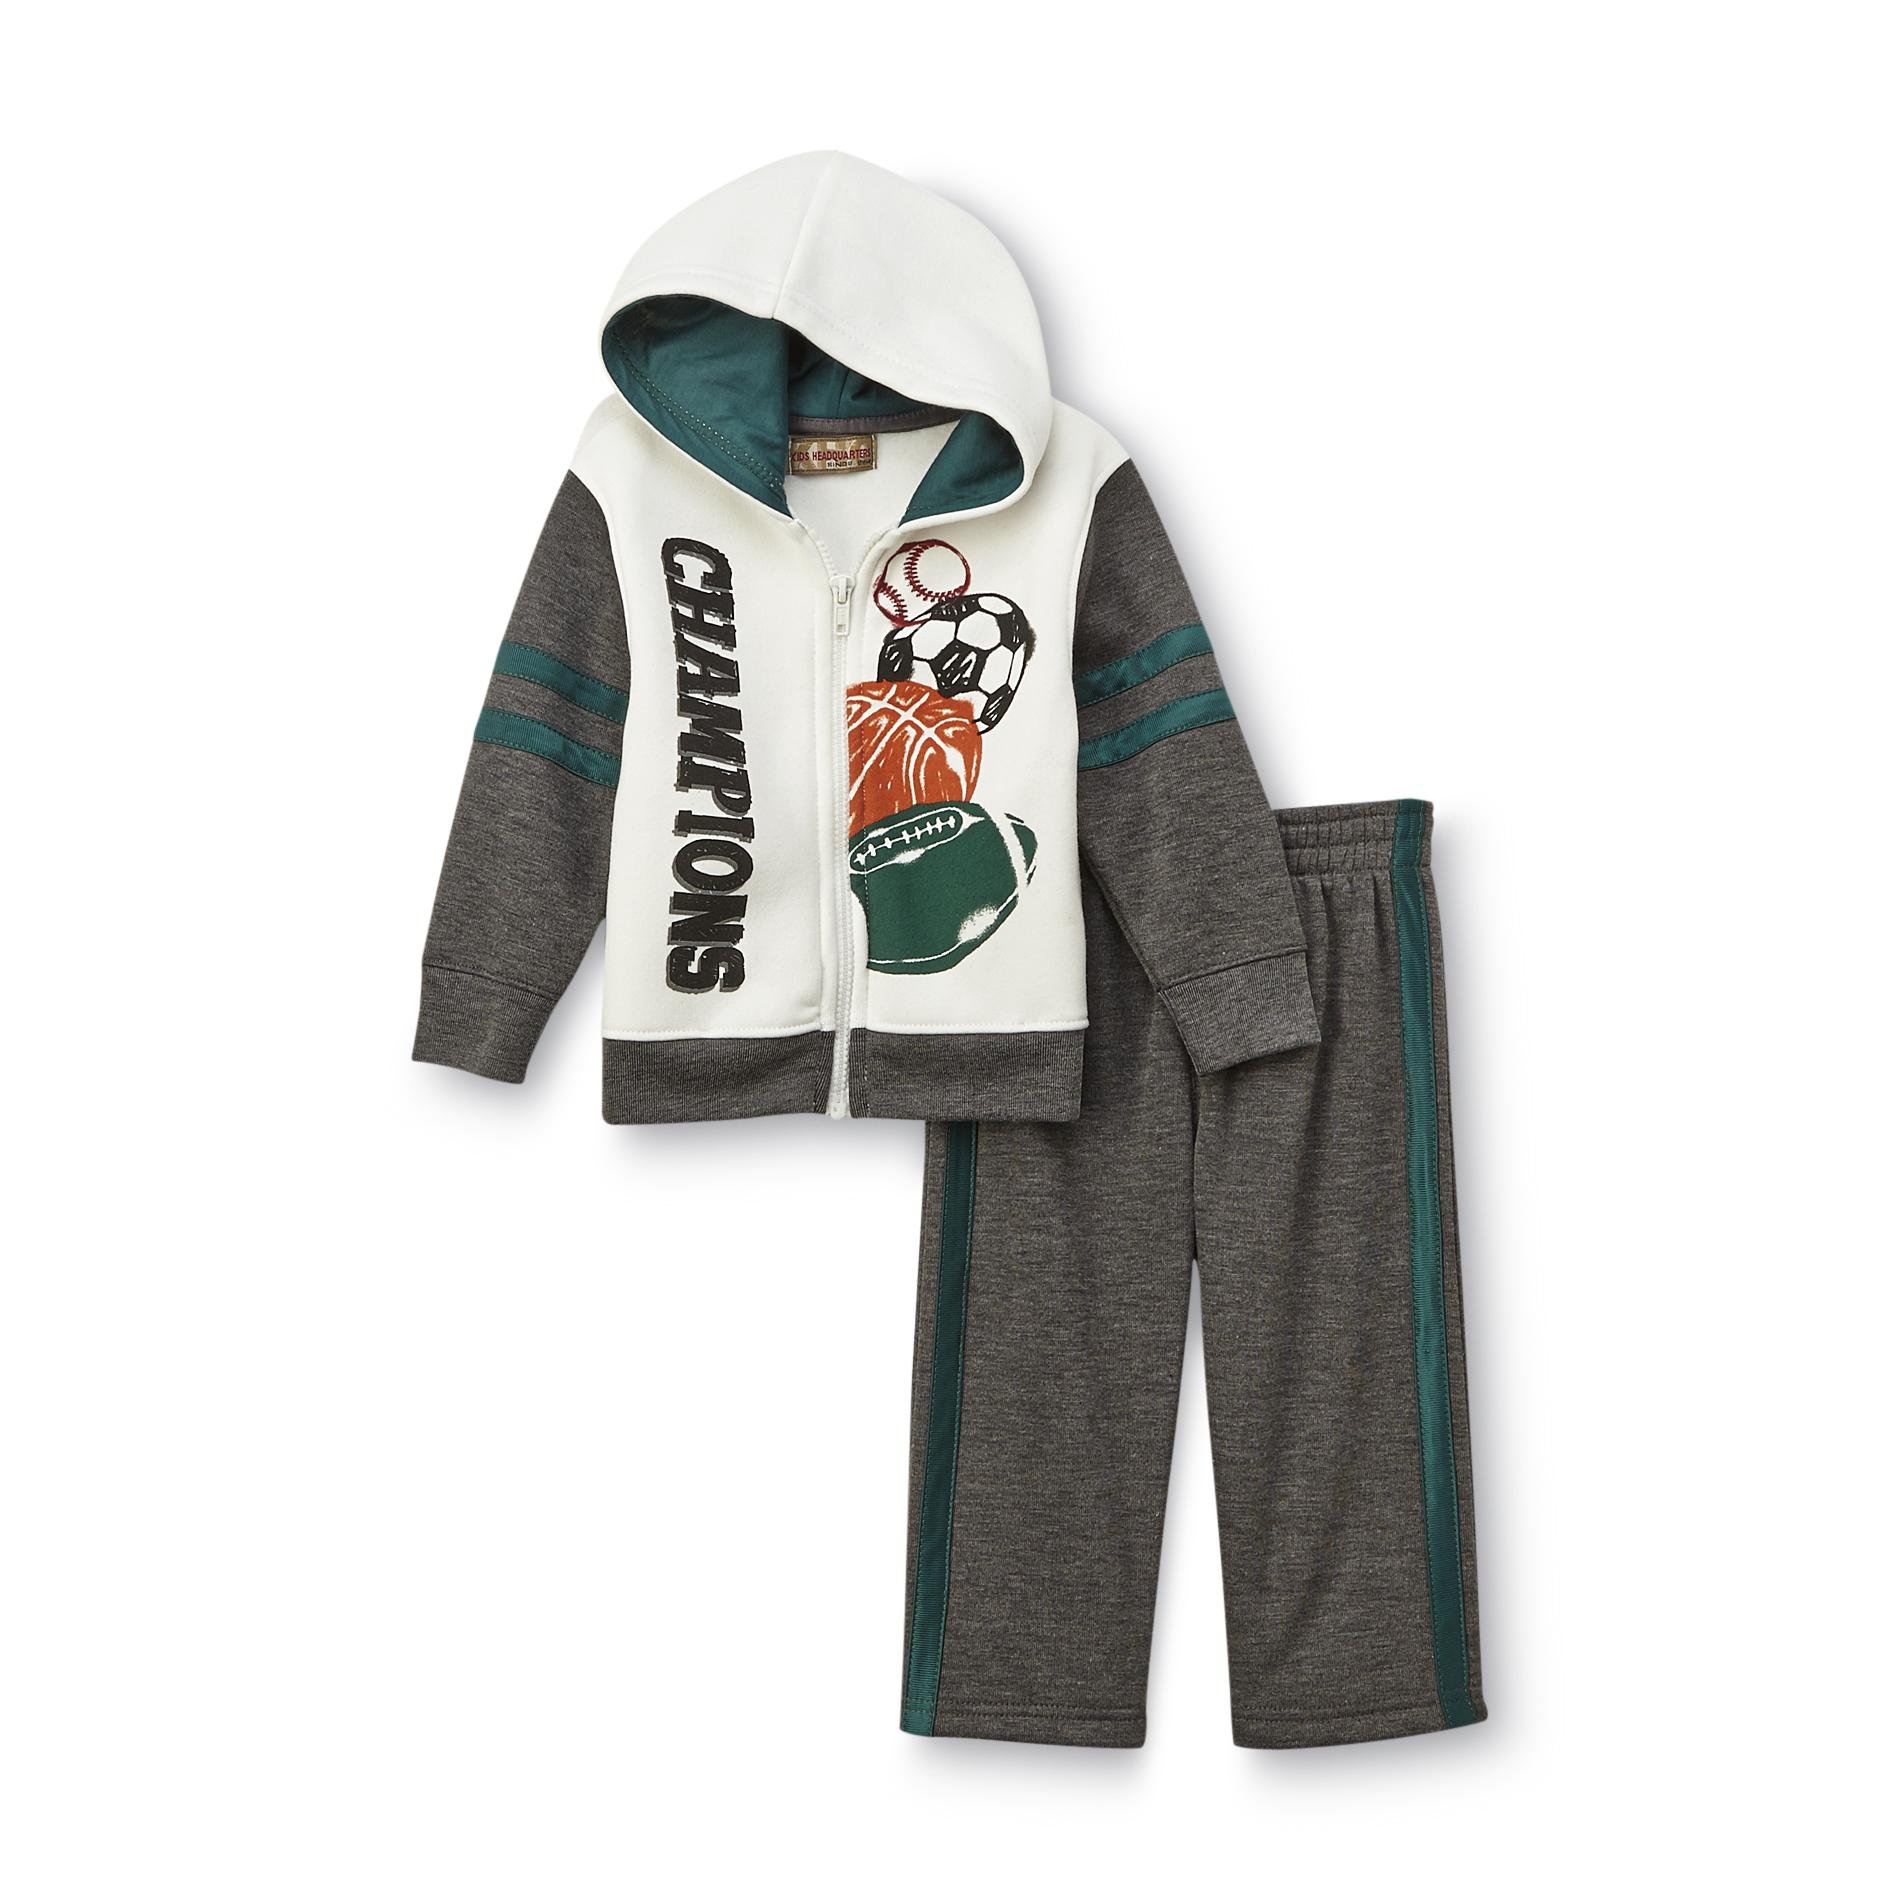 Kids Headquarters Infant & Toddler Boy's Hoodie Jacket & Active Pants - Sports